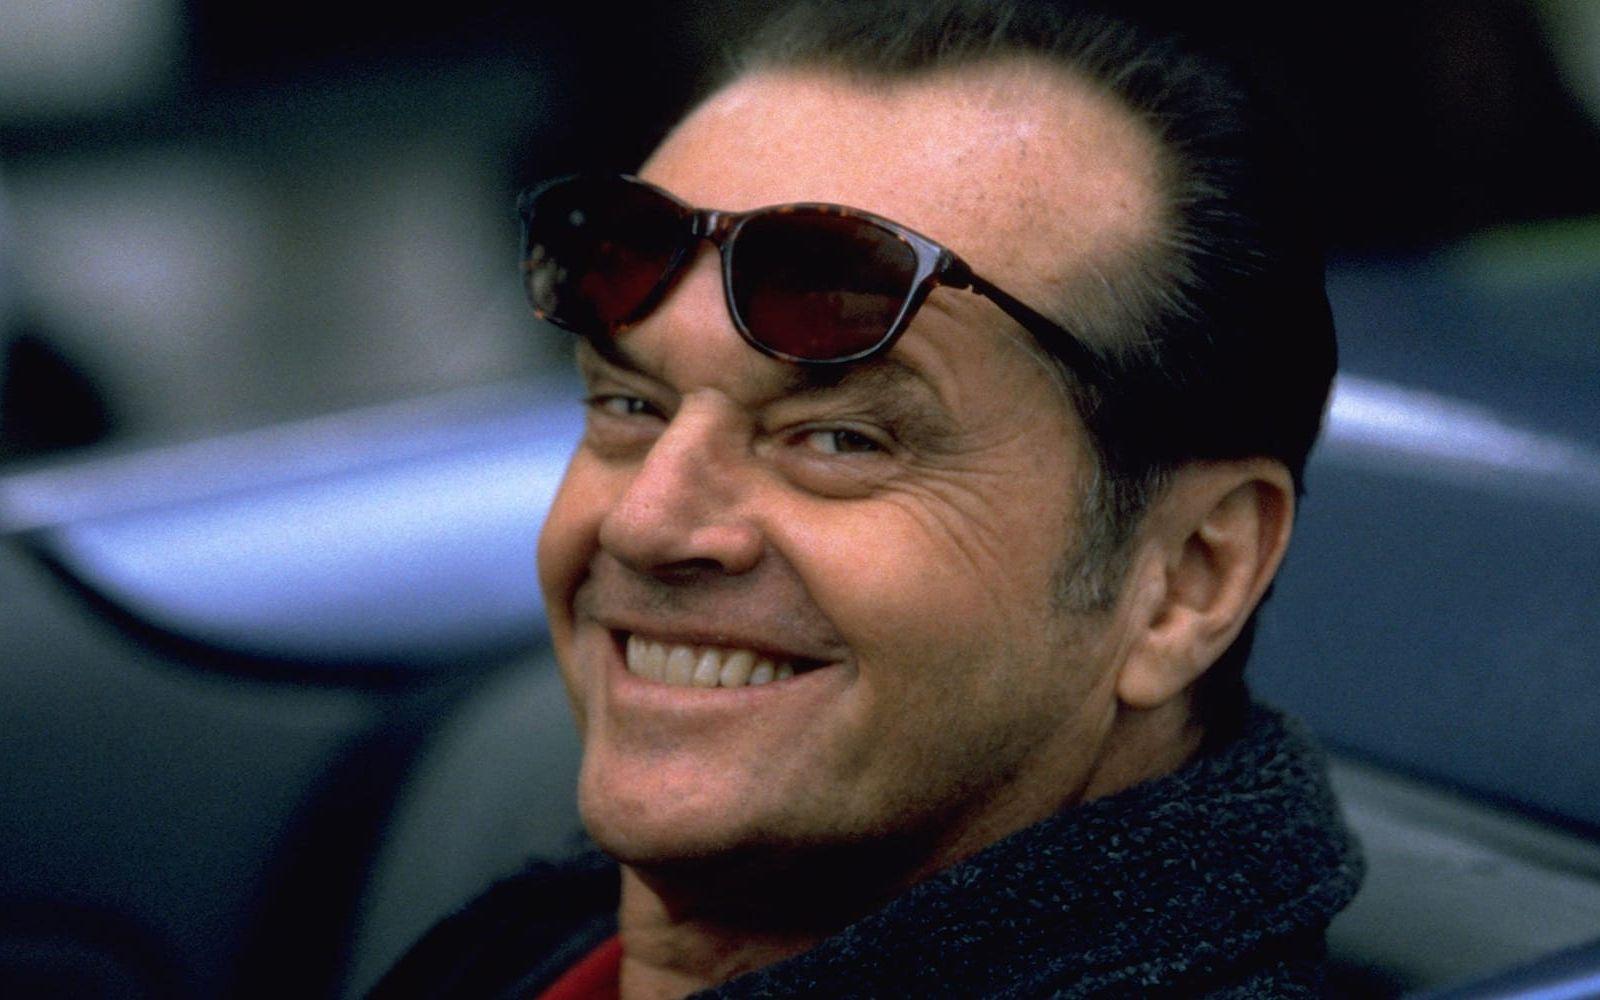 "You make me want to be a better man." – Jack Nicholson som Melvin Udall i Livet från den ljusa sidan, 1997. Foto: Stella